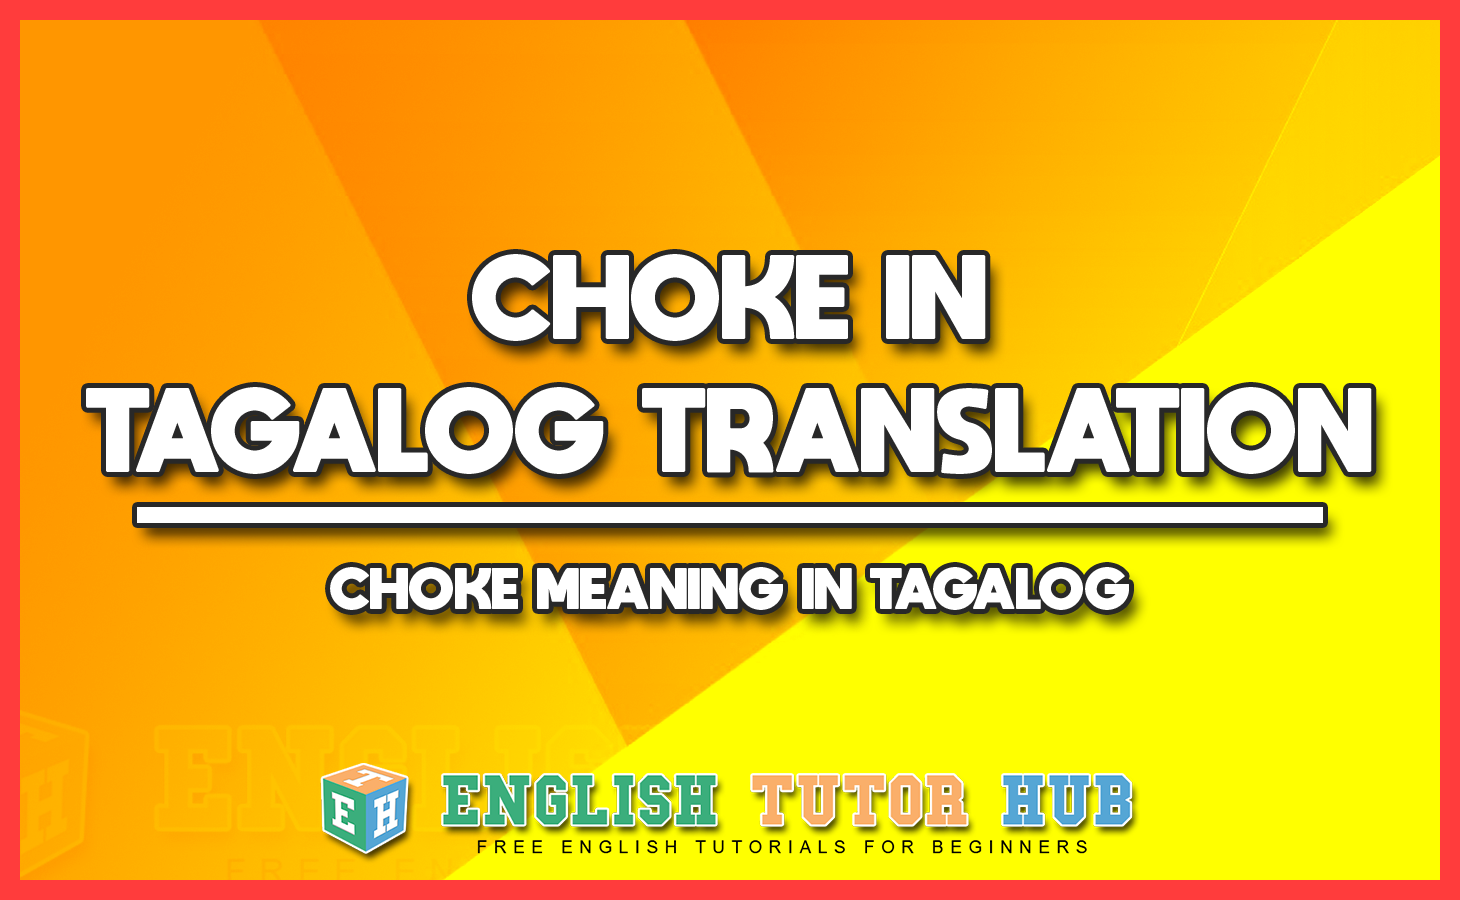 CHOKE IN TAGALOG TRANSLATION - CHOKE MEANING IN TAGALOG